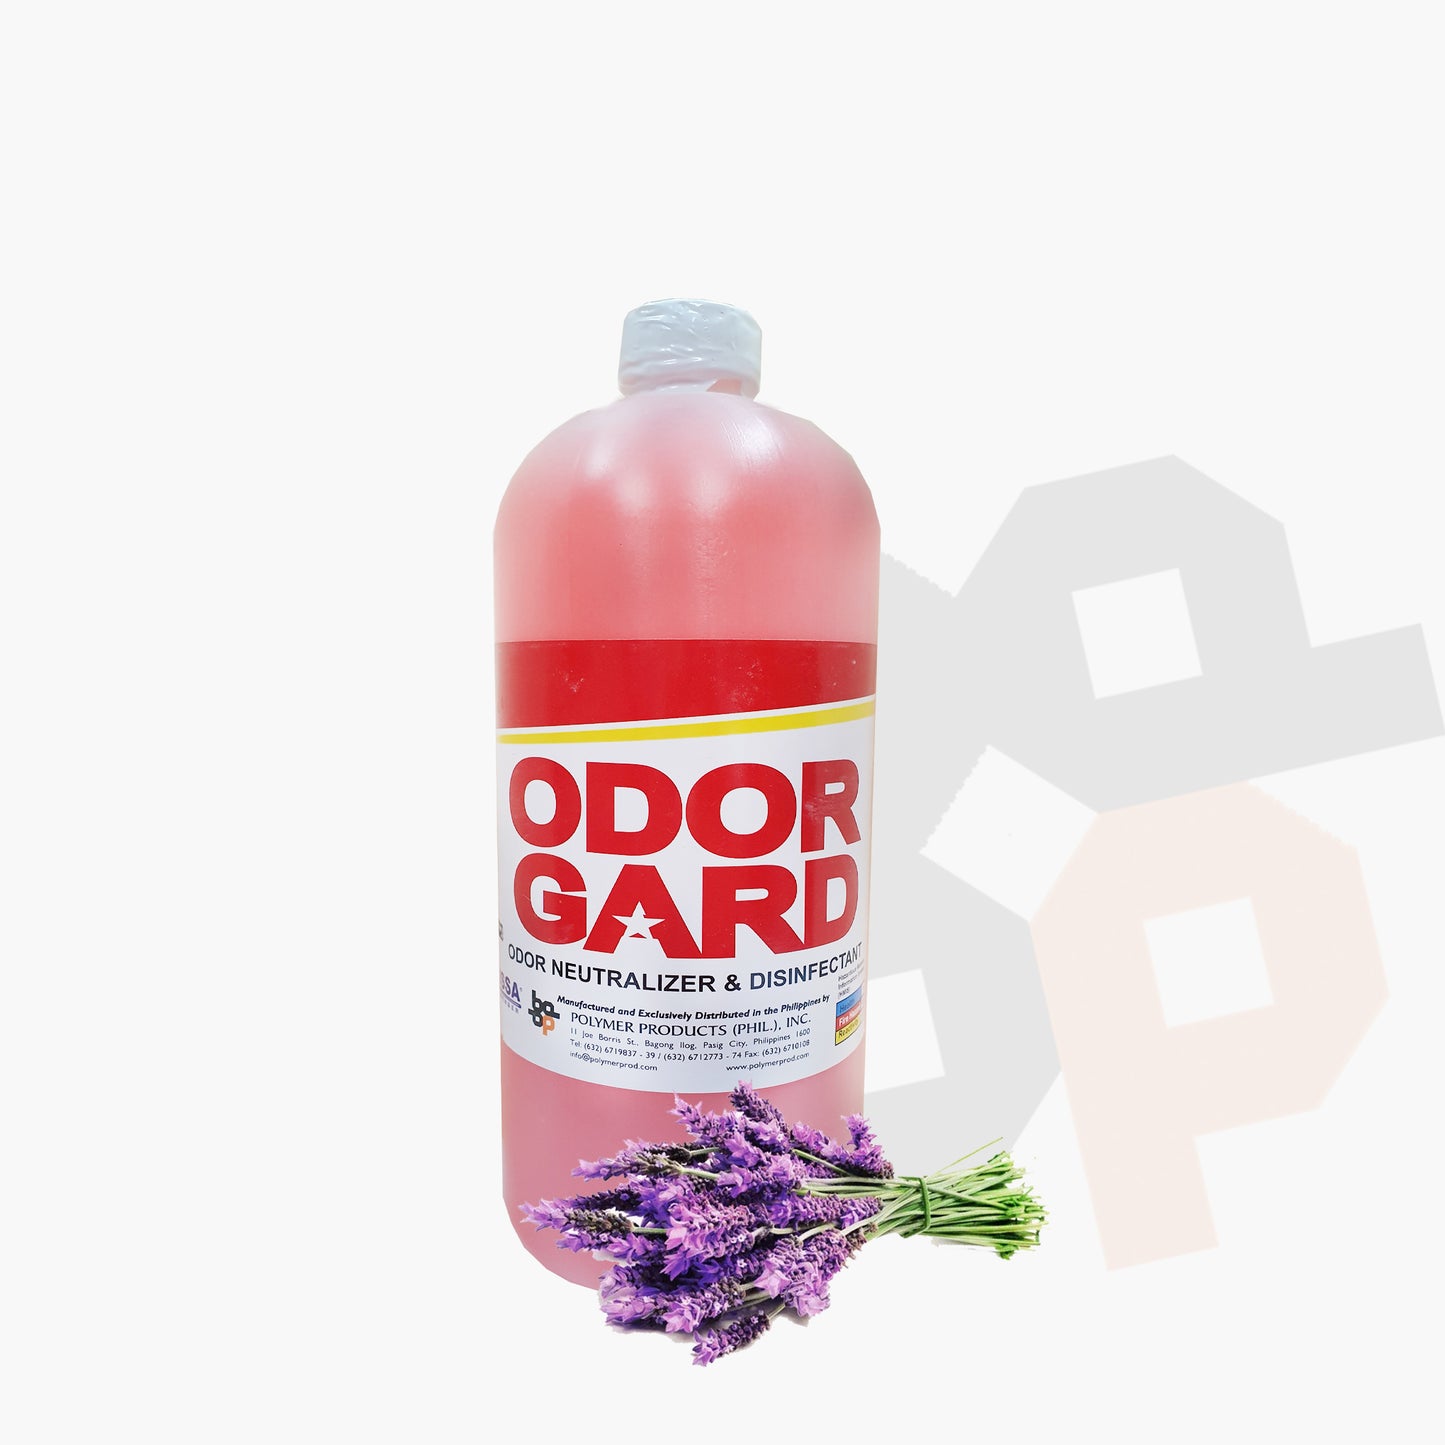 OdorGard Odor Neutralizer & Disinfectant